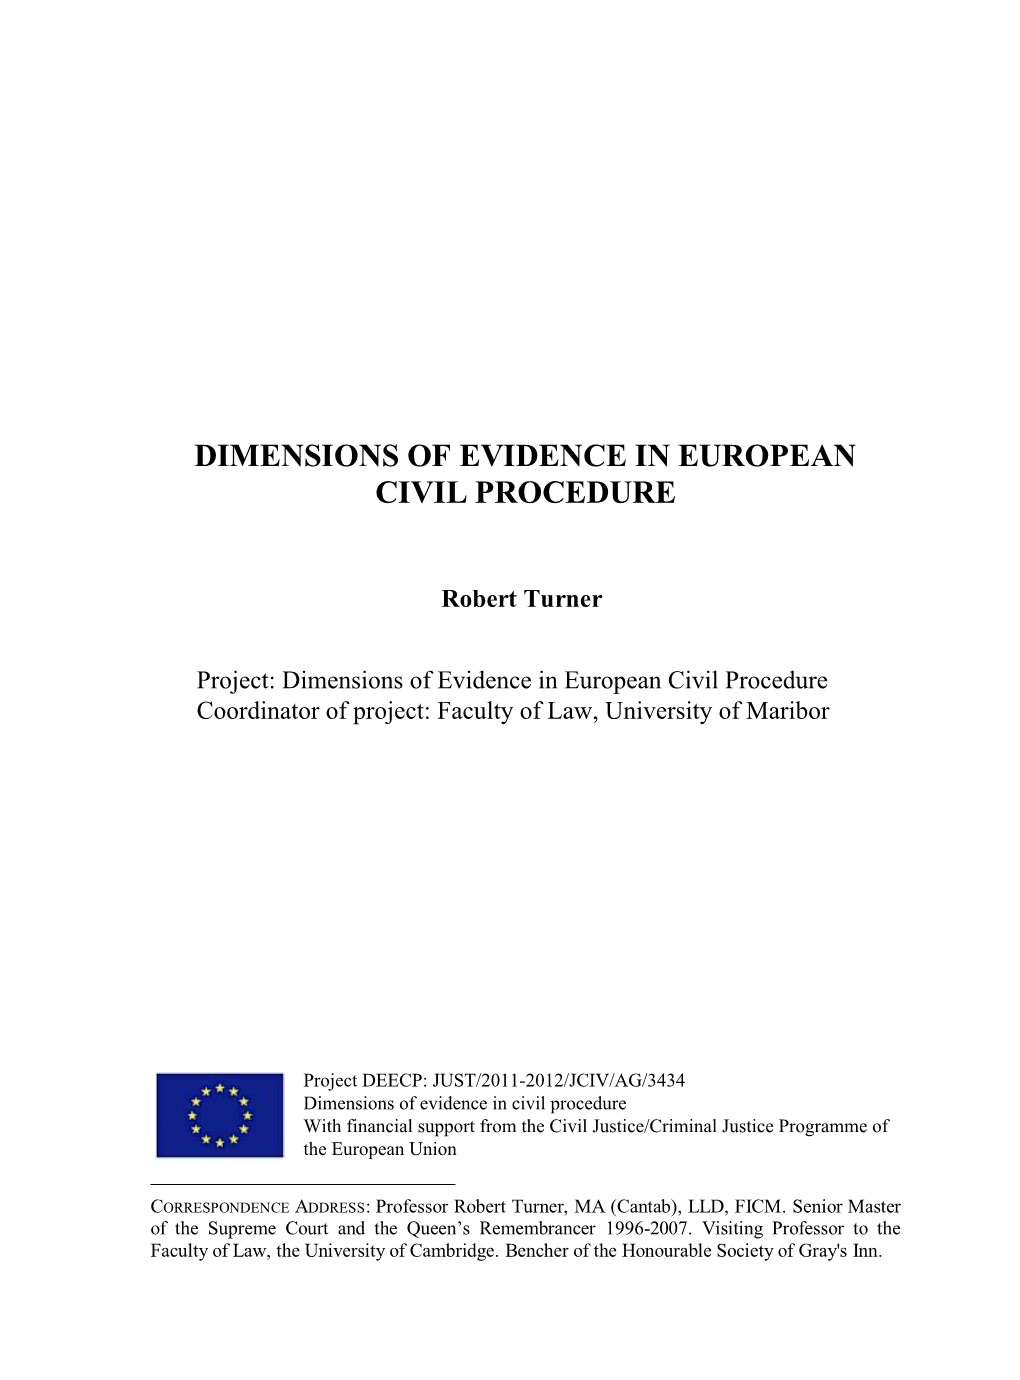 Dimensions of Evidence in European Civil Procedure